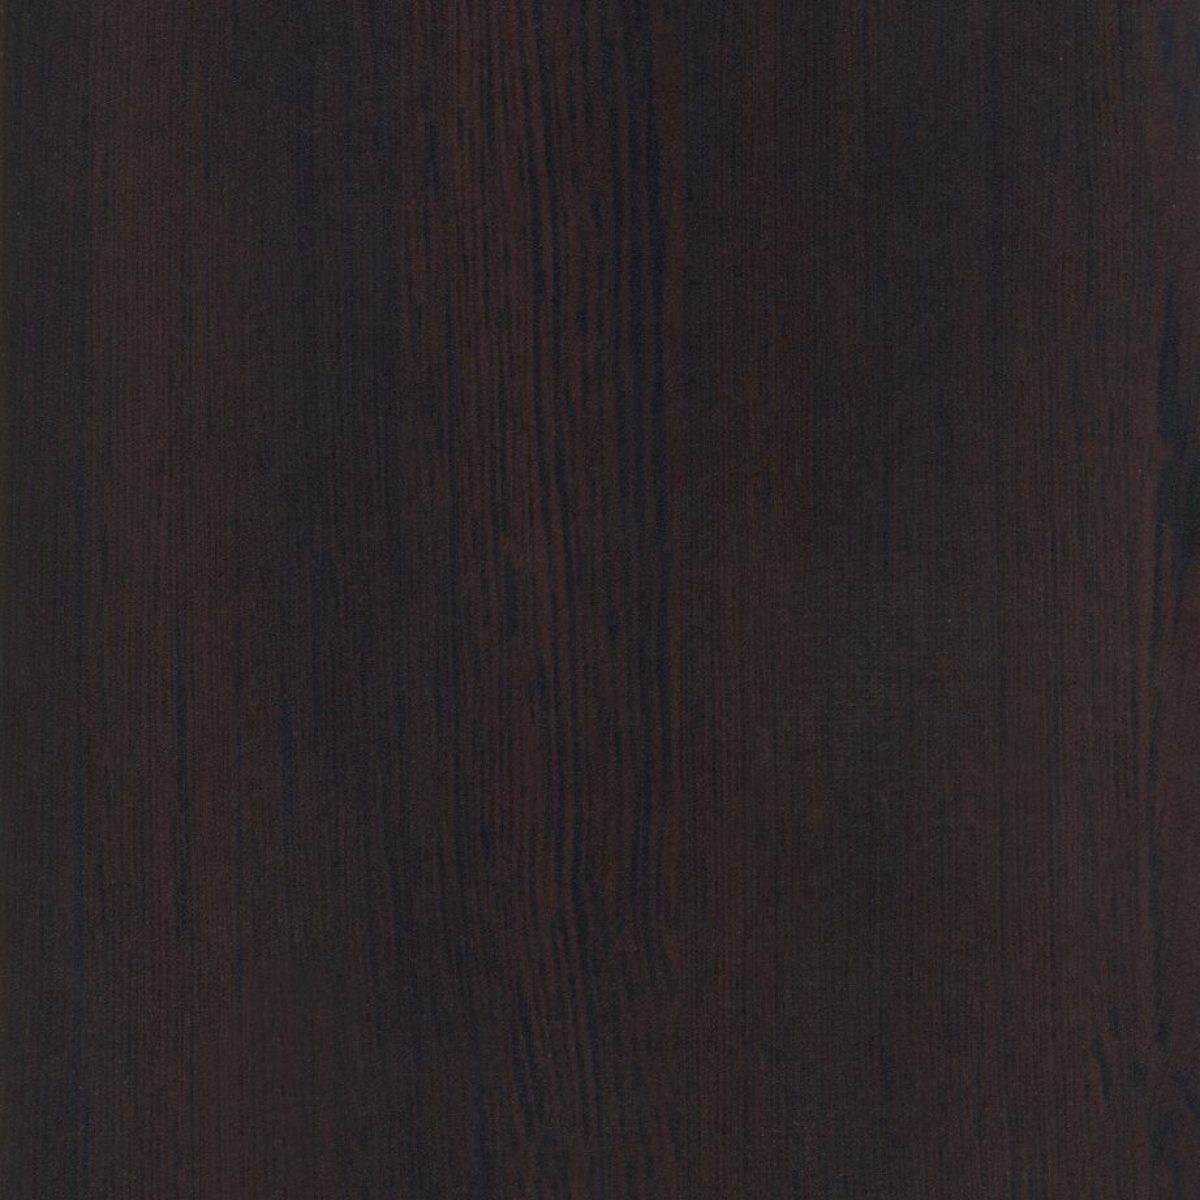 CHOCOLATE OAK - Tamaños (1,22 x 2,44m)  |  Espesor (0.7mm)